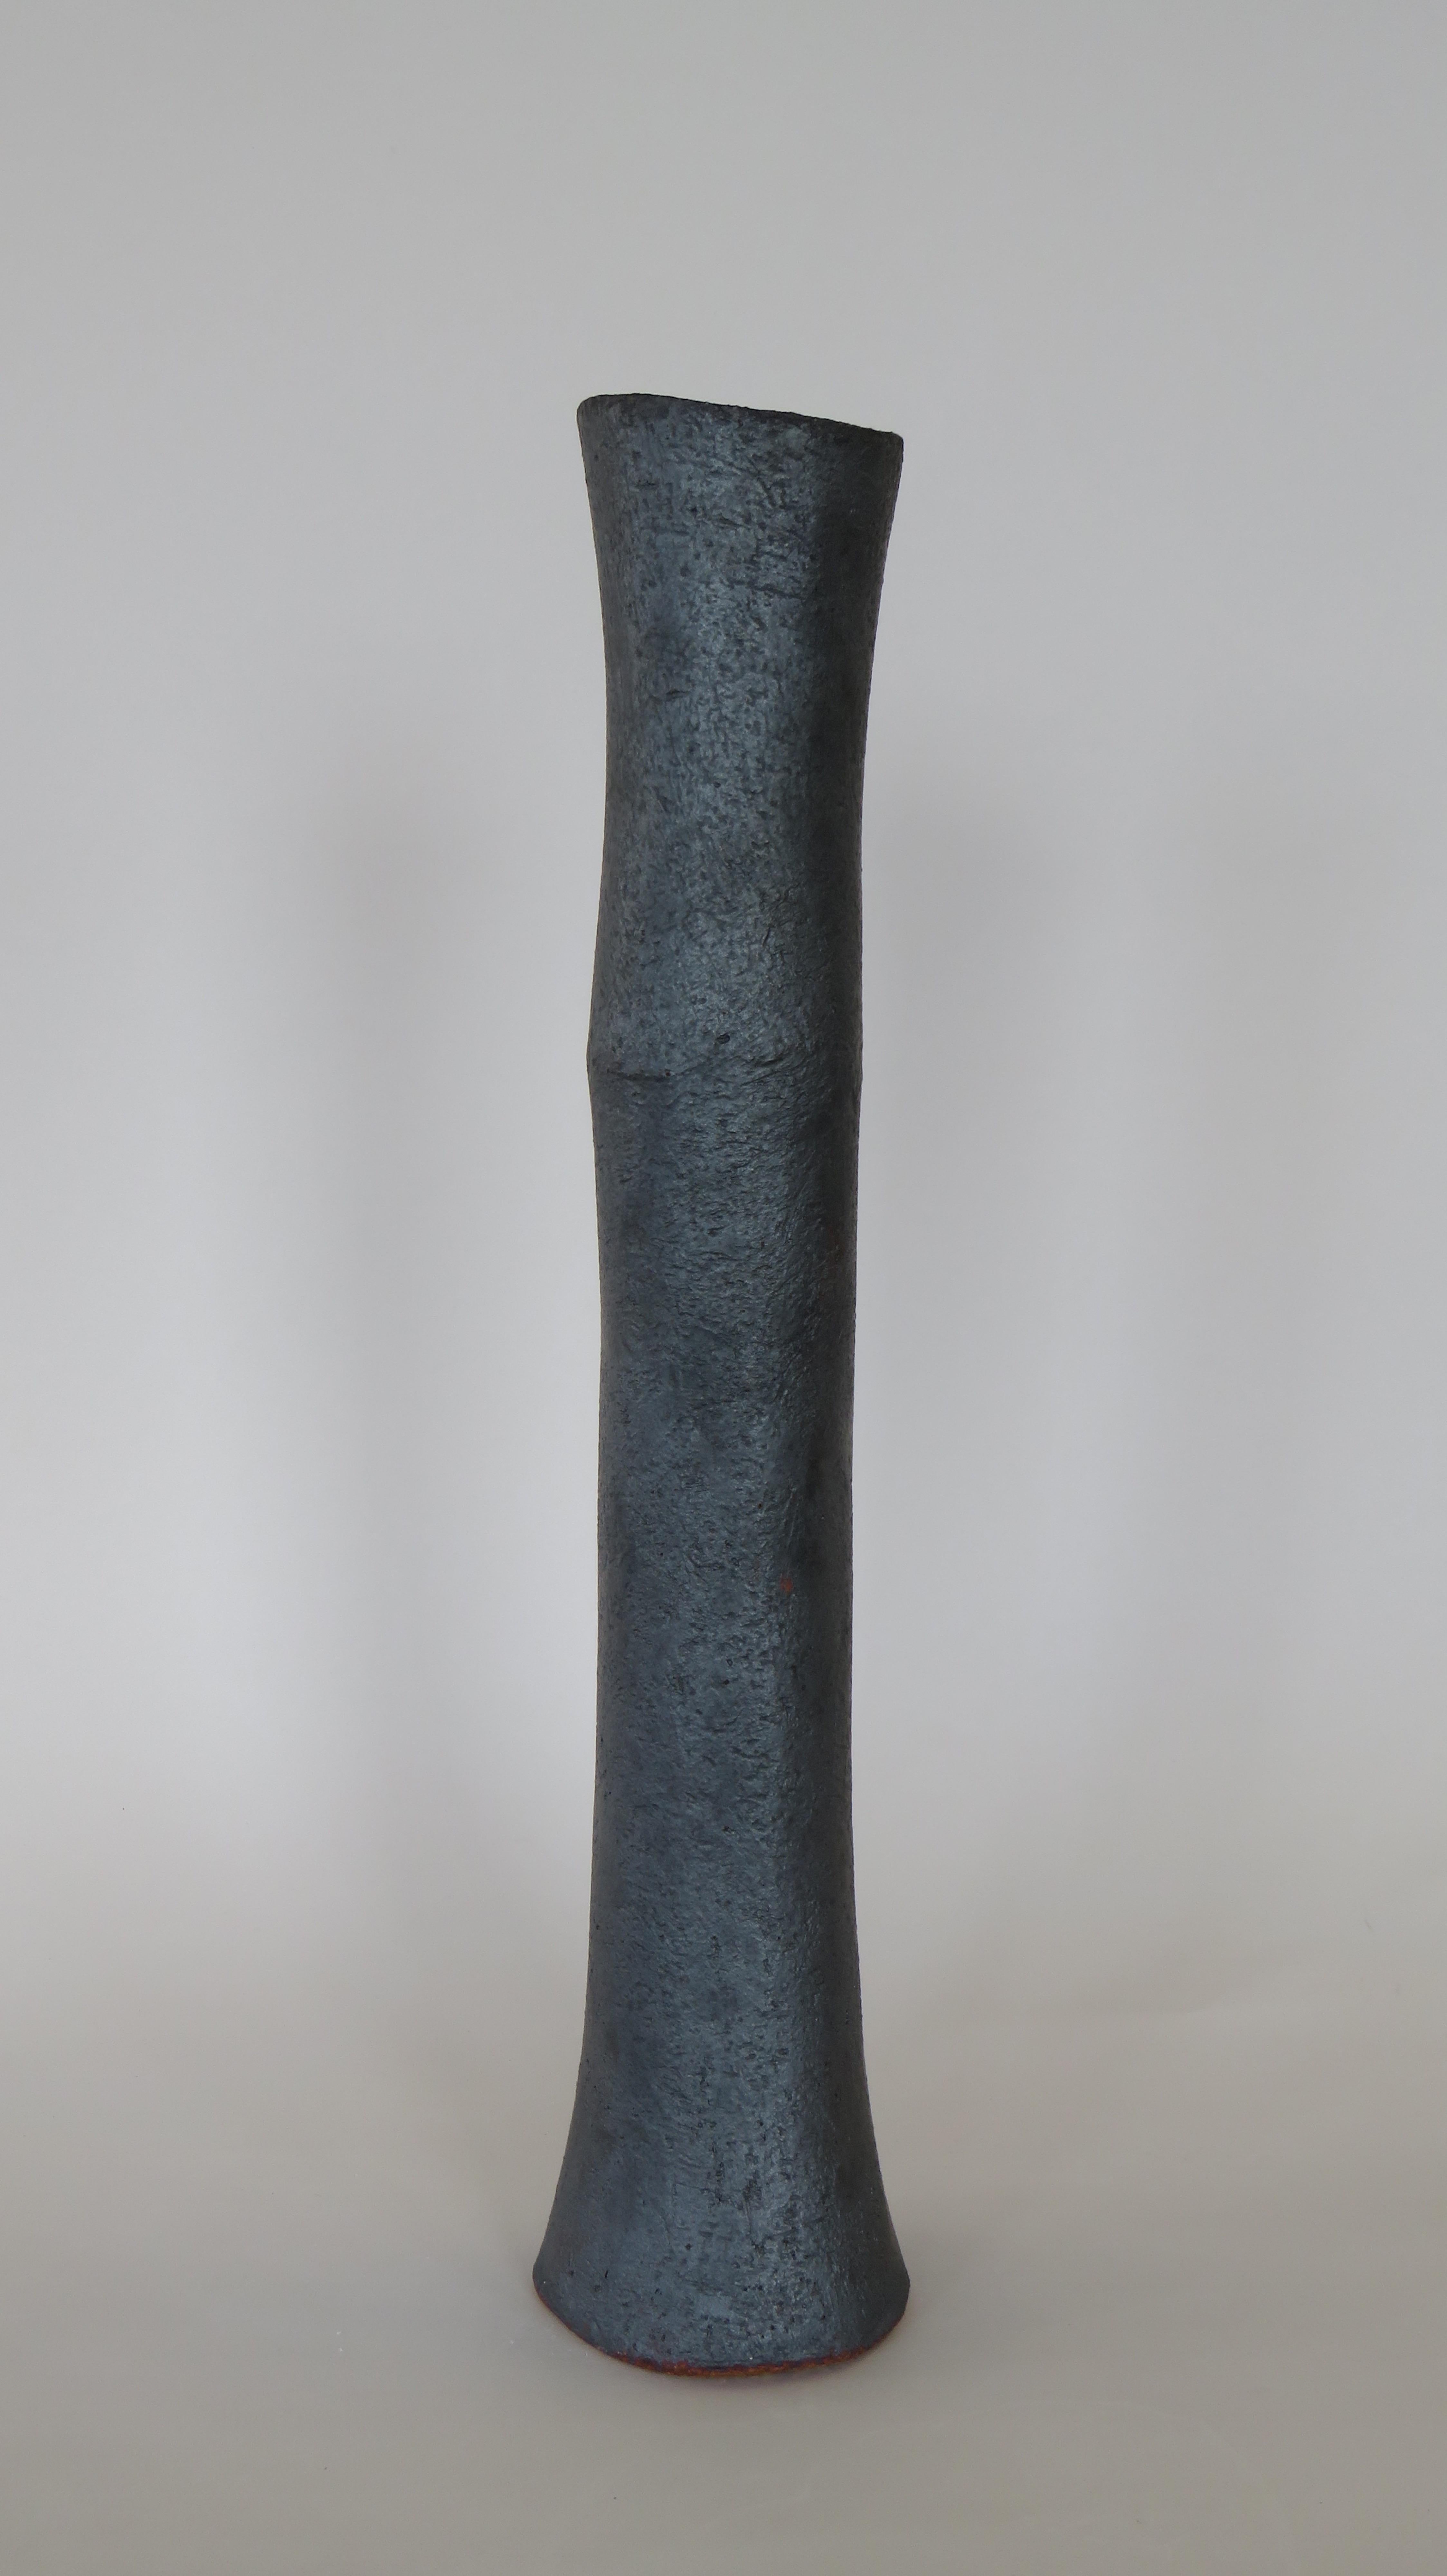 Tall, Tubular Metallic Black Ceramic Stoneware Vase, Hand Built 19 Inches Tall (Handgefertigt)